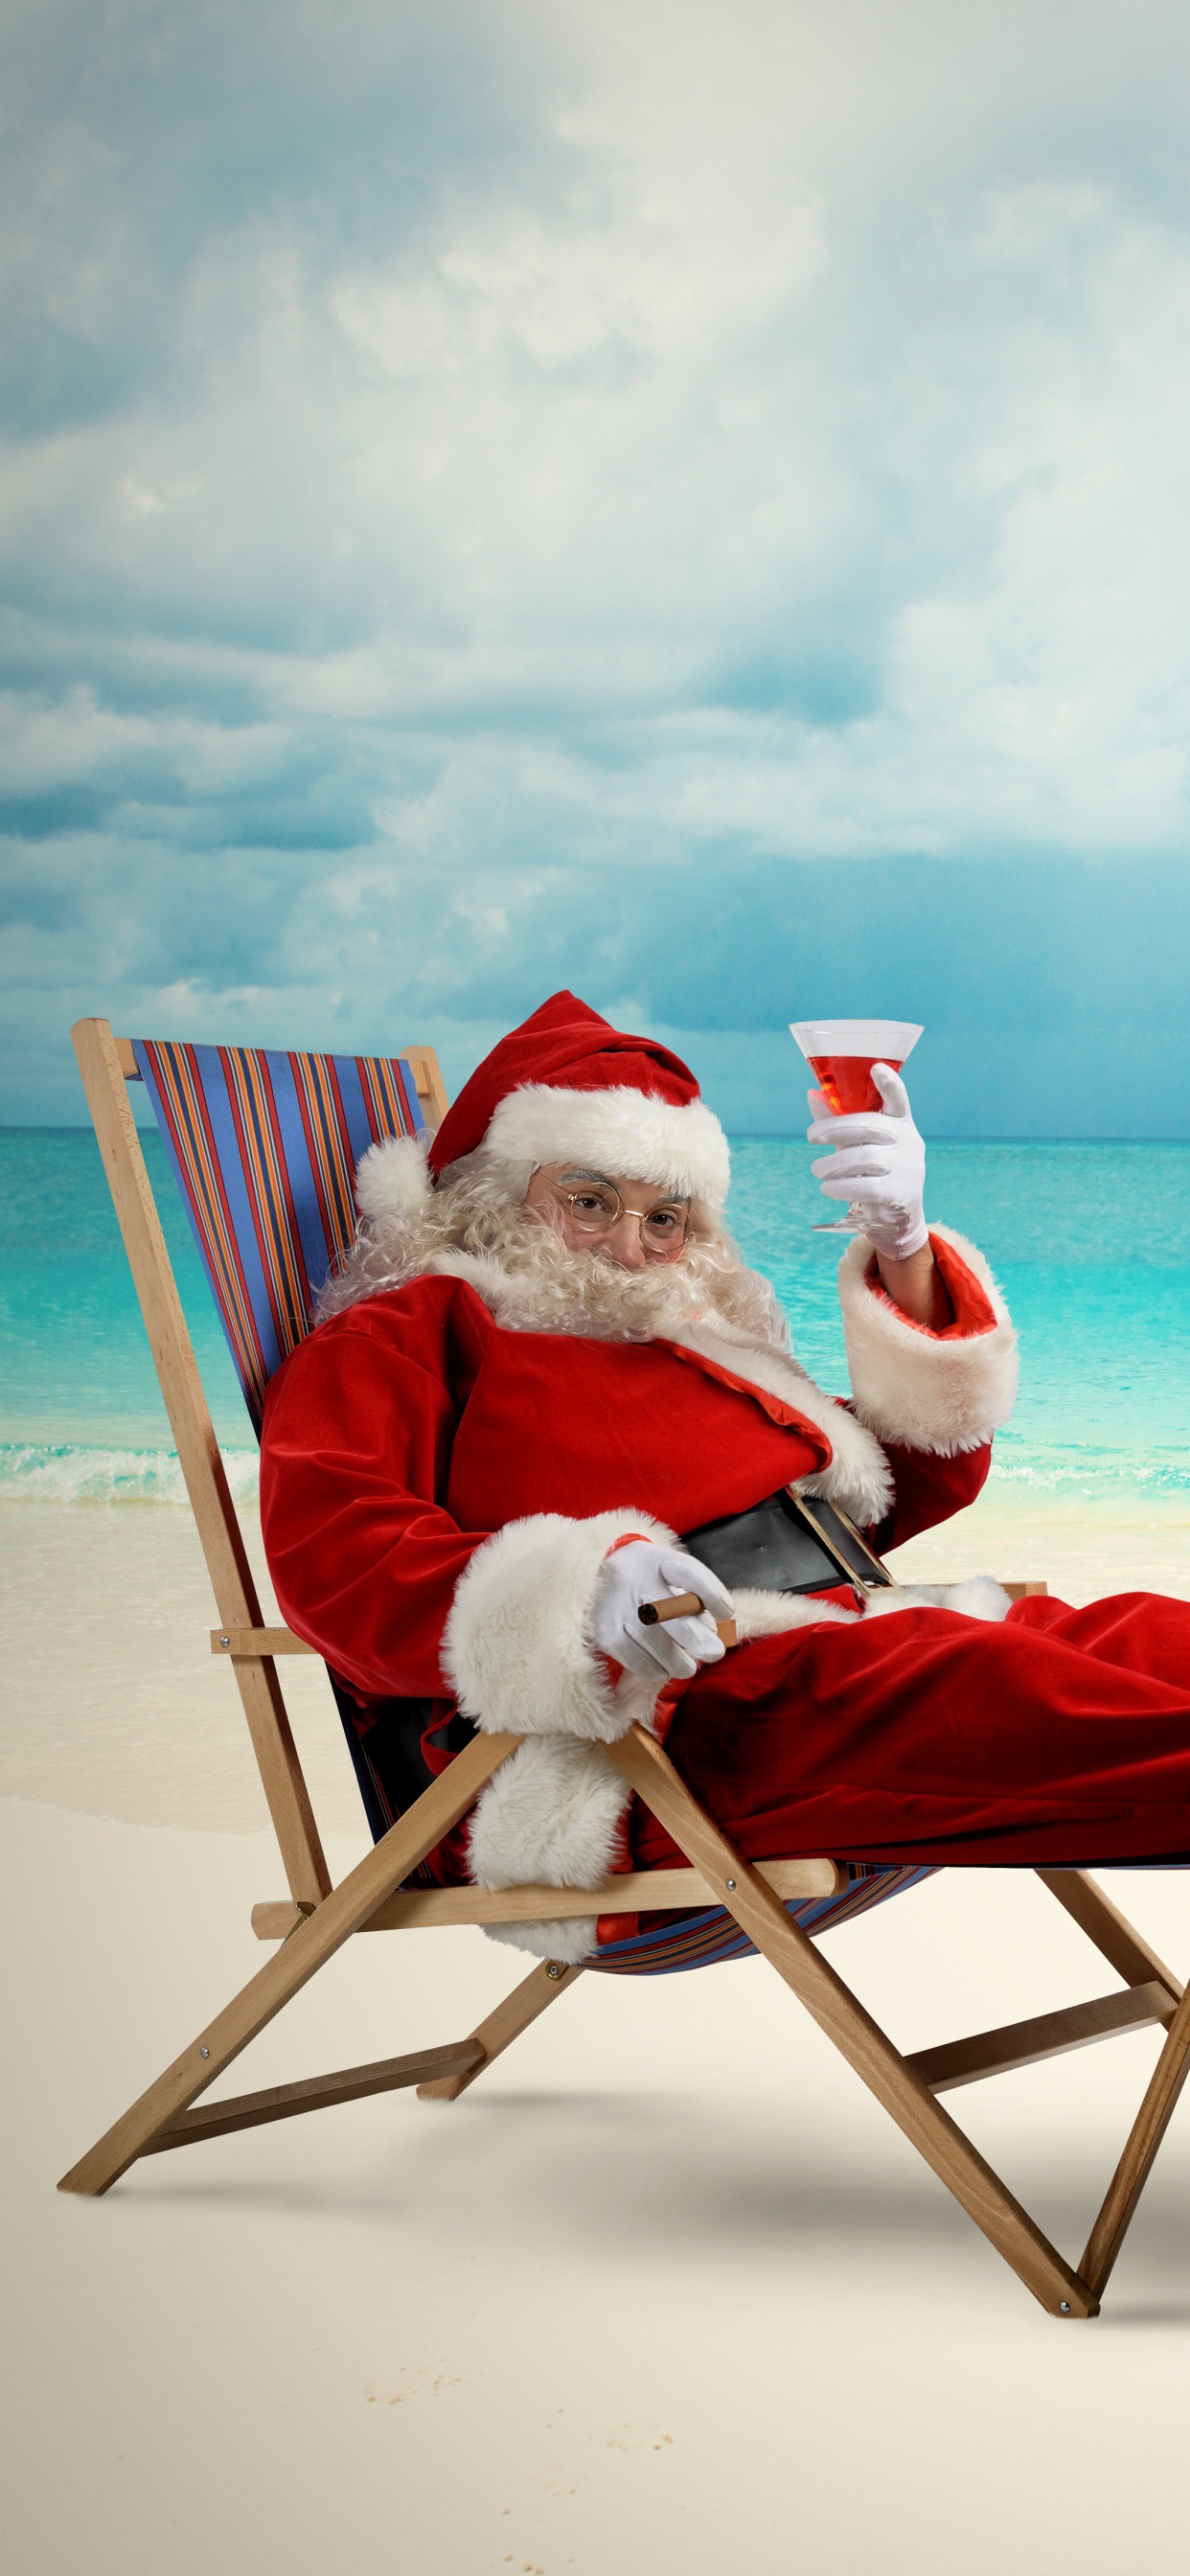 Santa Claus, Christmas Day, Beach, Sea, Vacation. Wallpaper in 1242x2688 Resolution